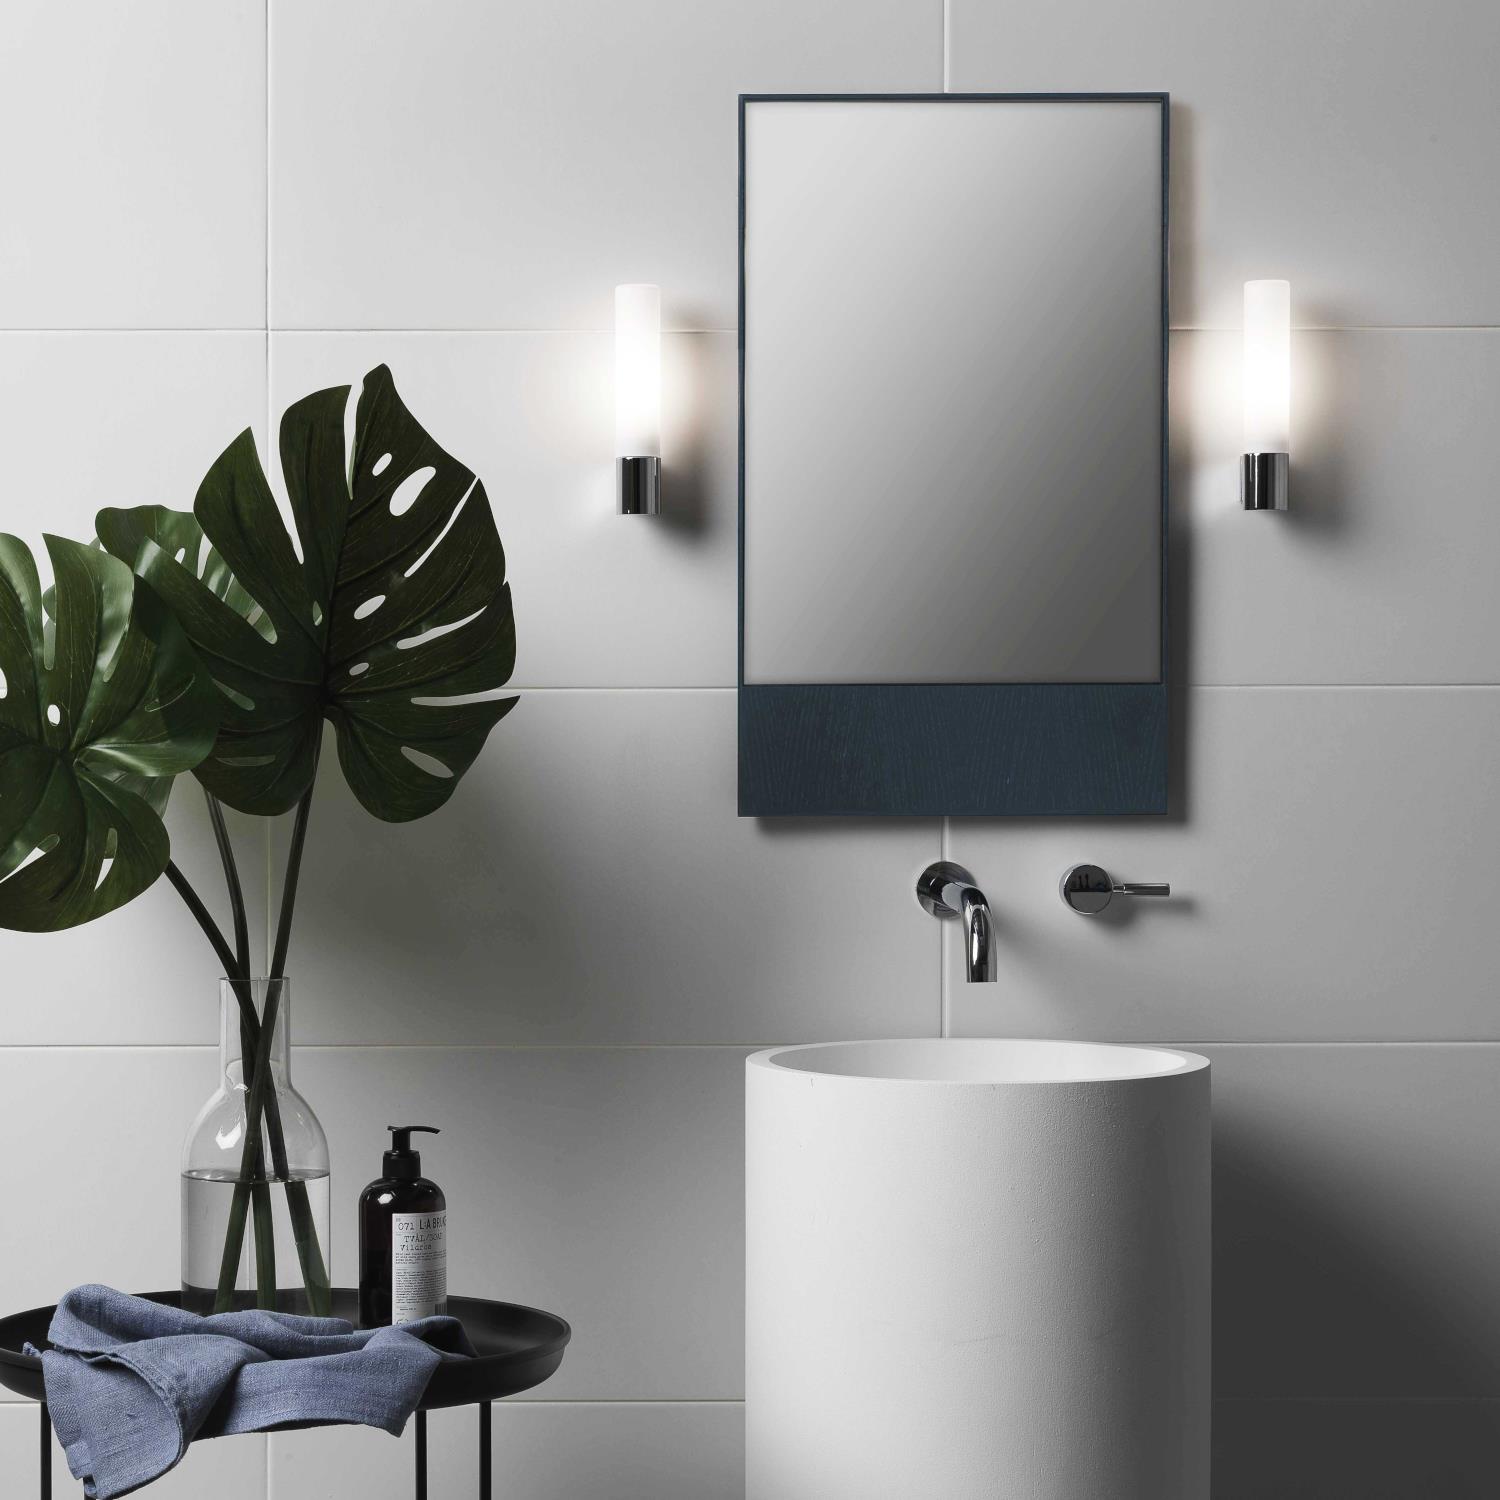 Bari Ip44 Led Bathroom Wall Light Polished Chrome 1047001 (0340) 4635 